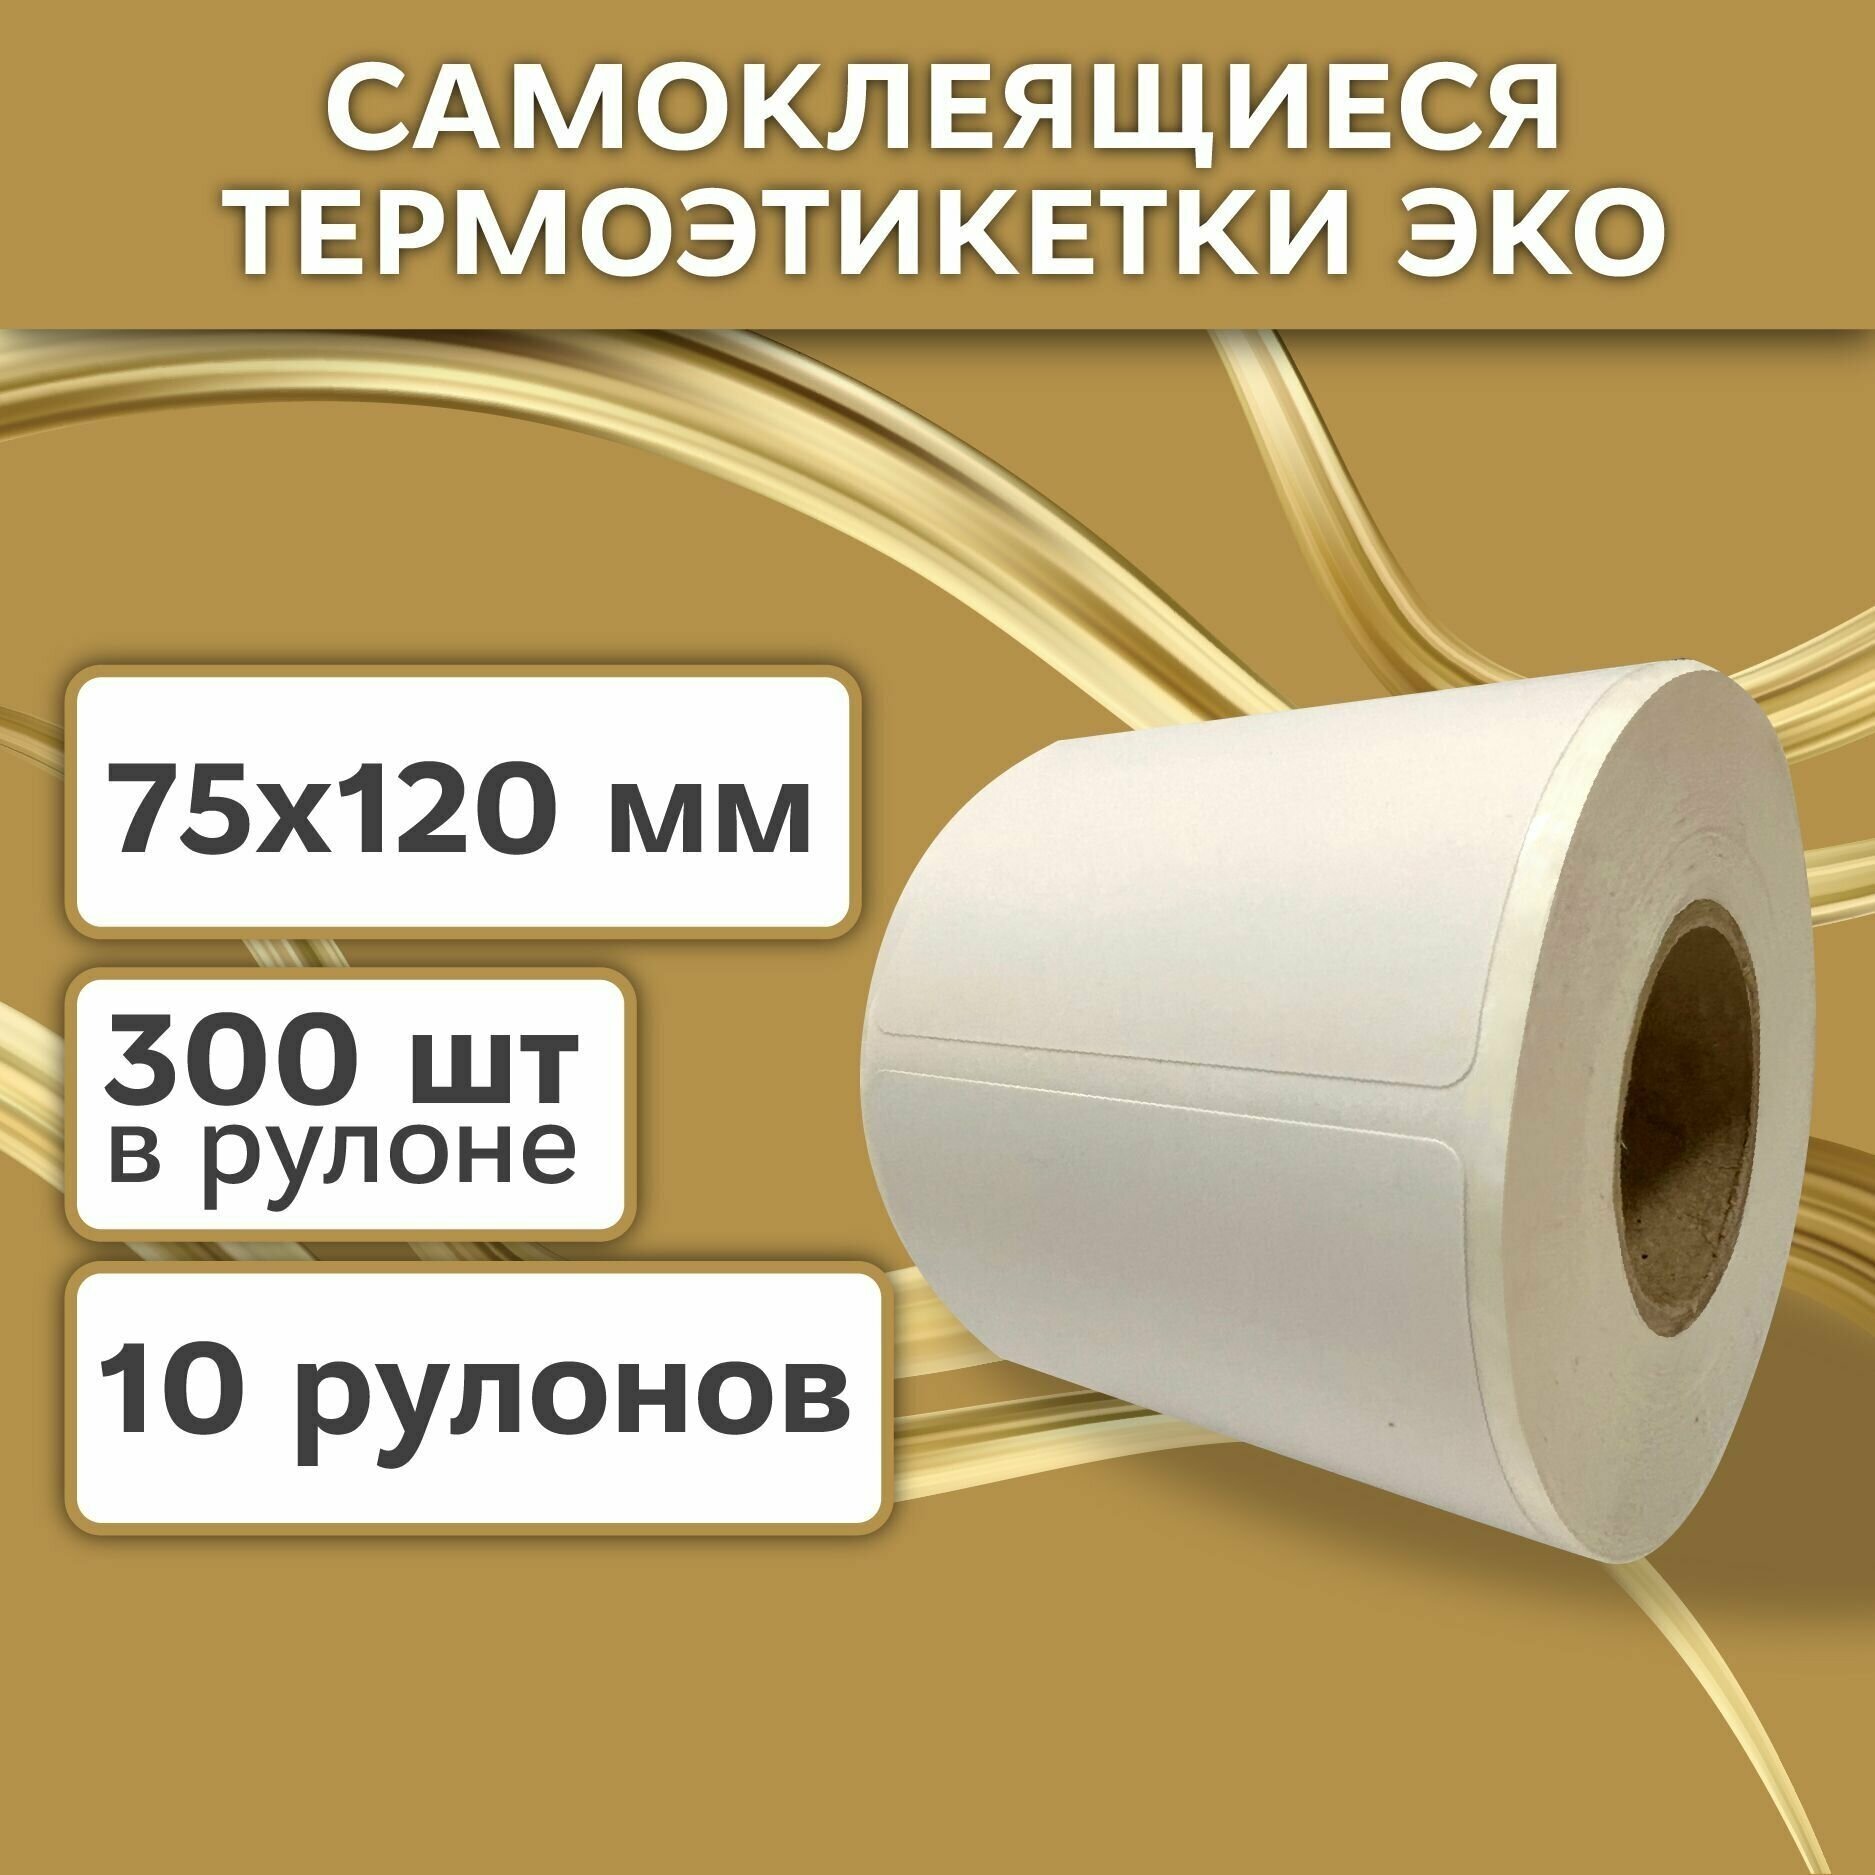 Термоэтикетки 75х120 мм (3000 шт. 300 шт/рул) самоклеящиеся в рулоне, 40 мм полноразмерная втулка. В наборе 10 шт.